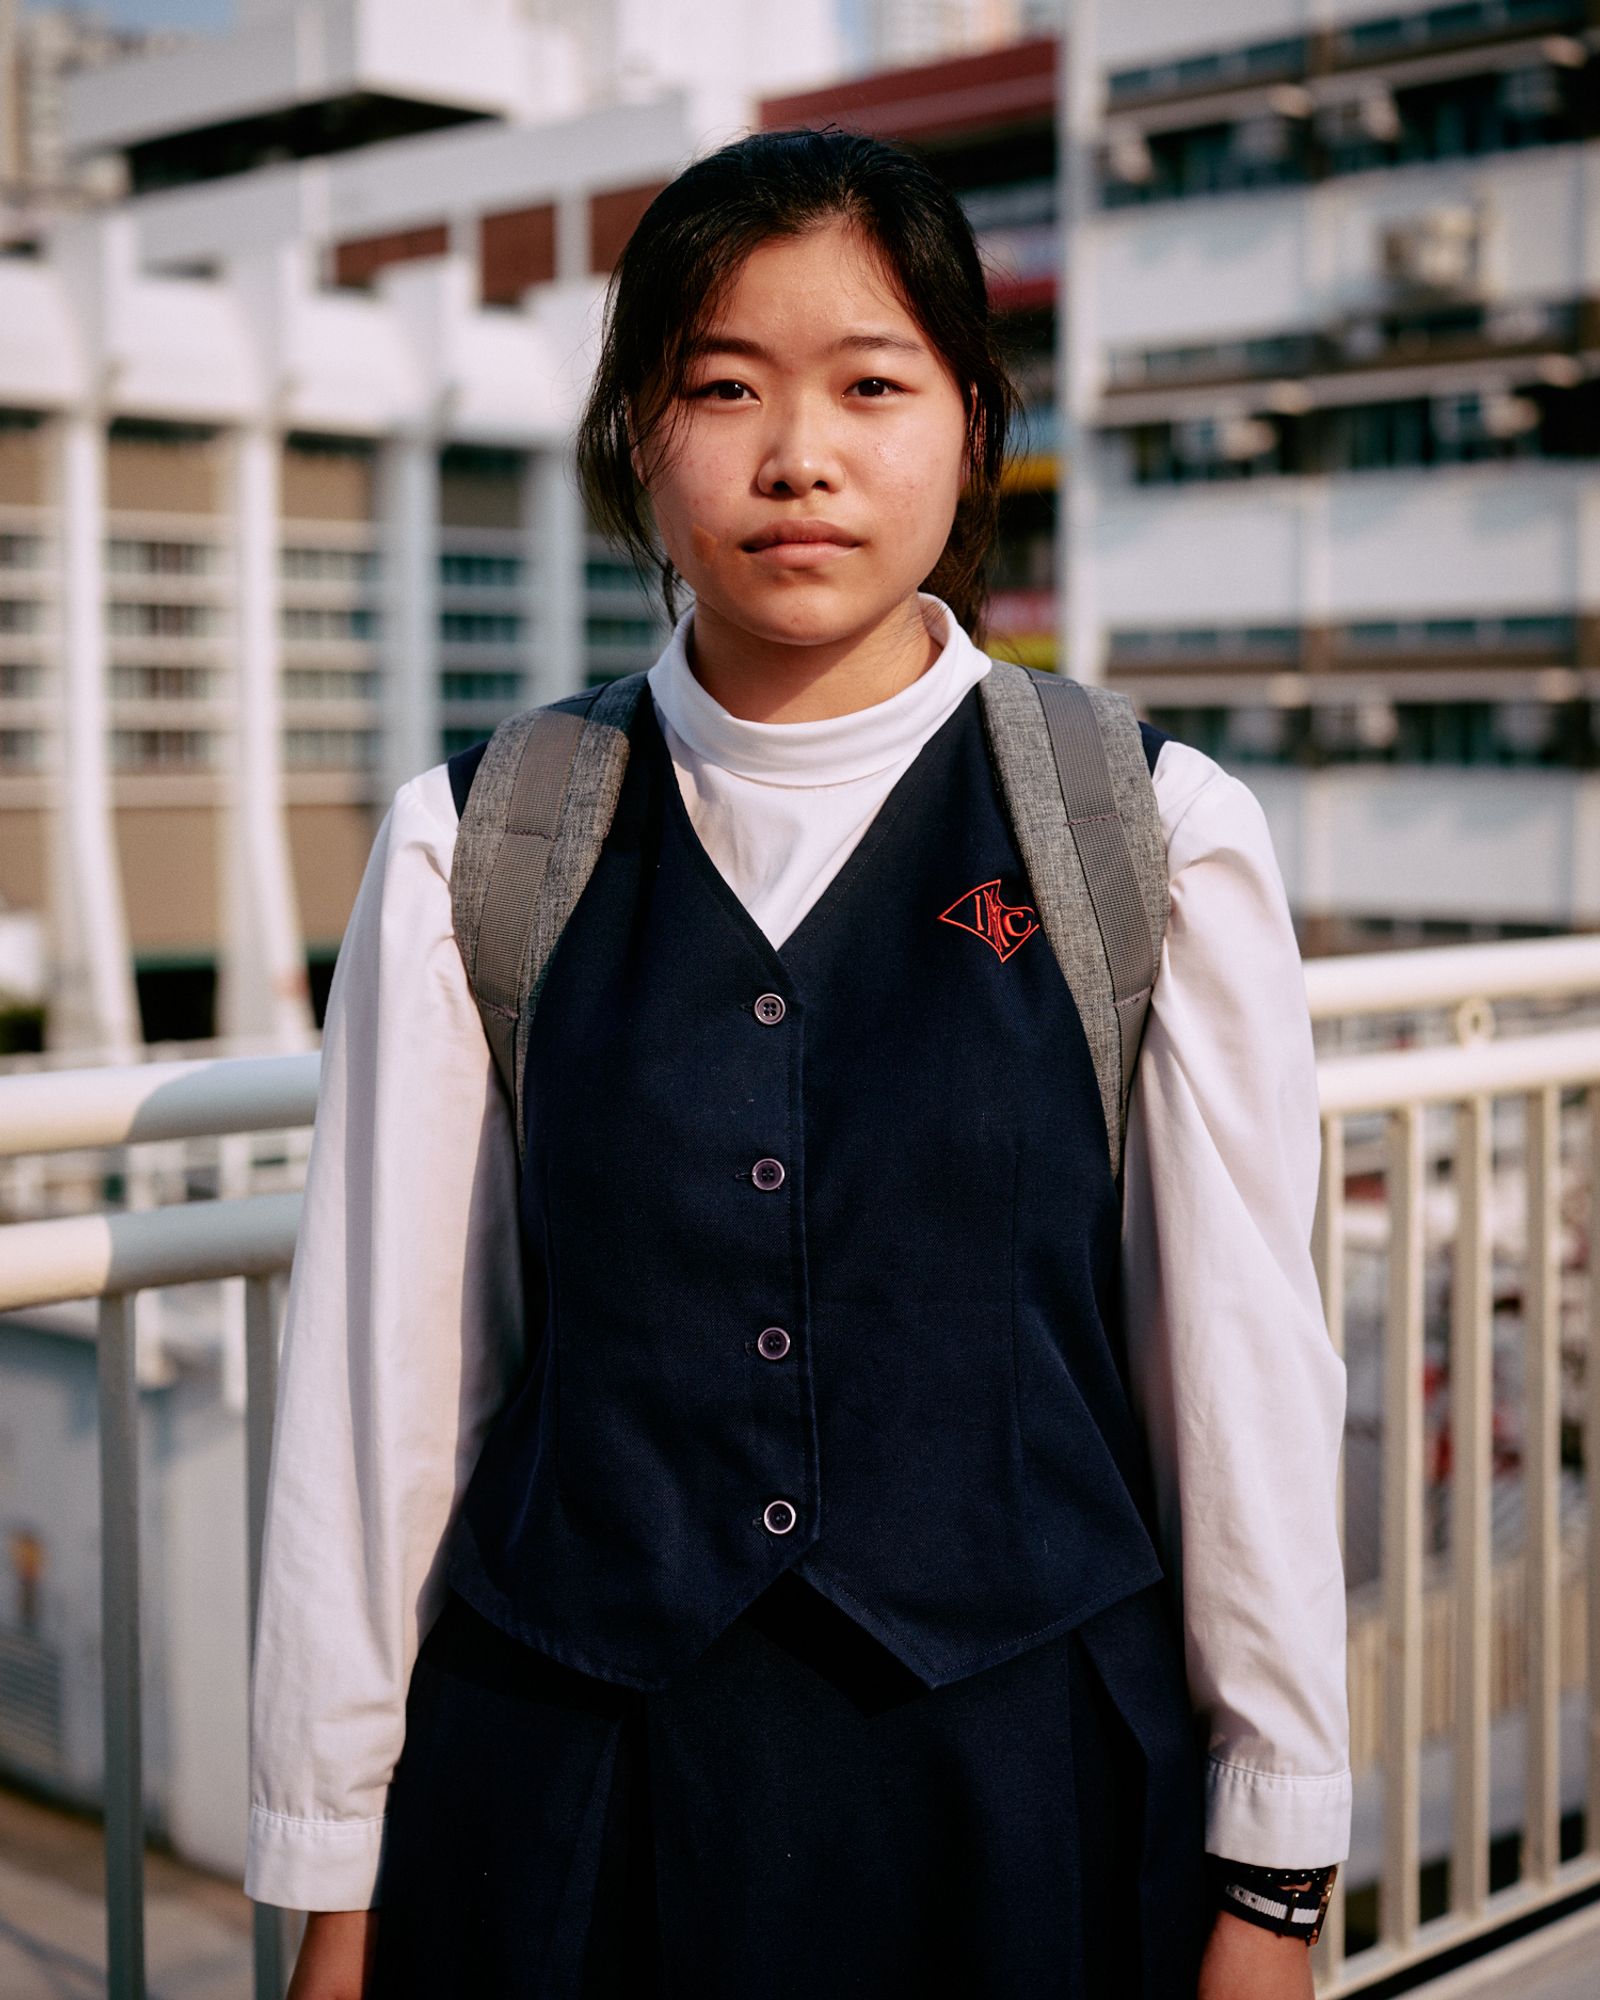 © Chung-wai Wong - Ashley, a student of a catholic secondary school.